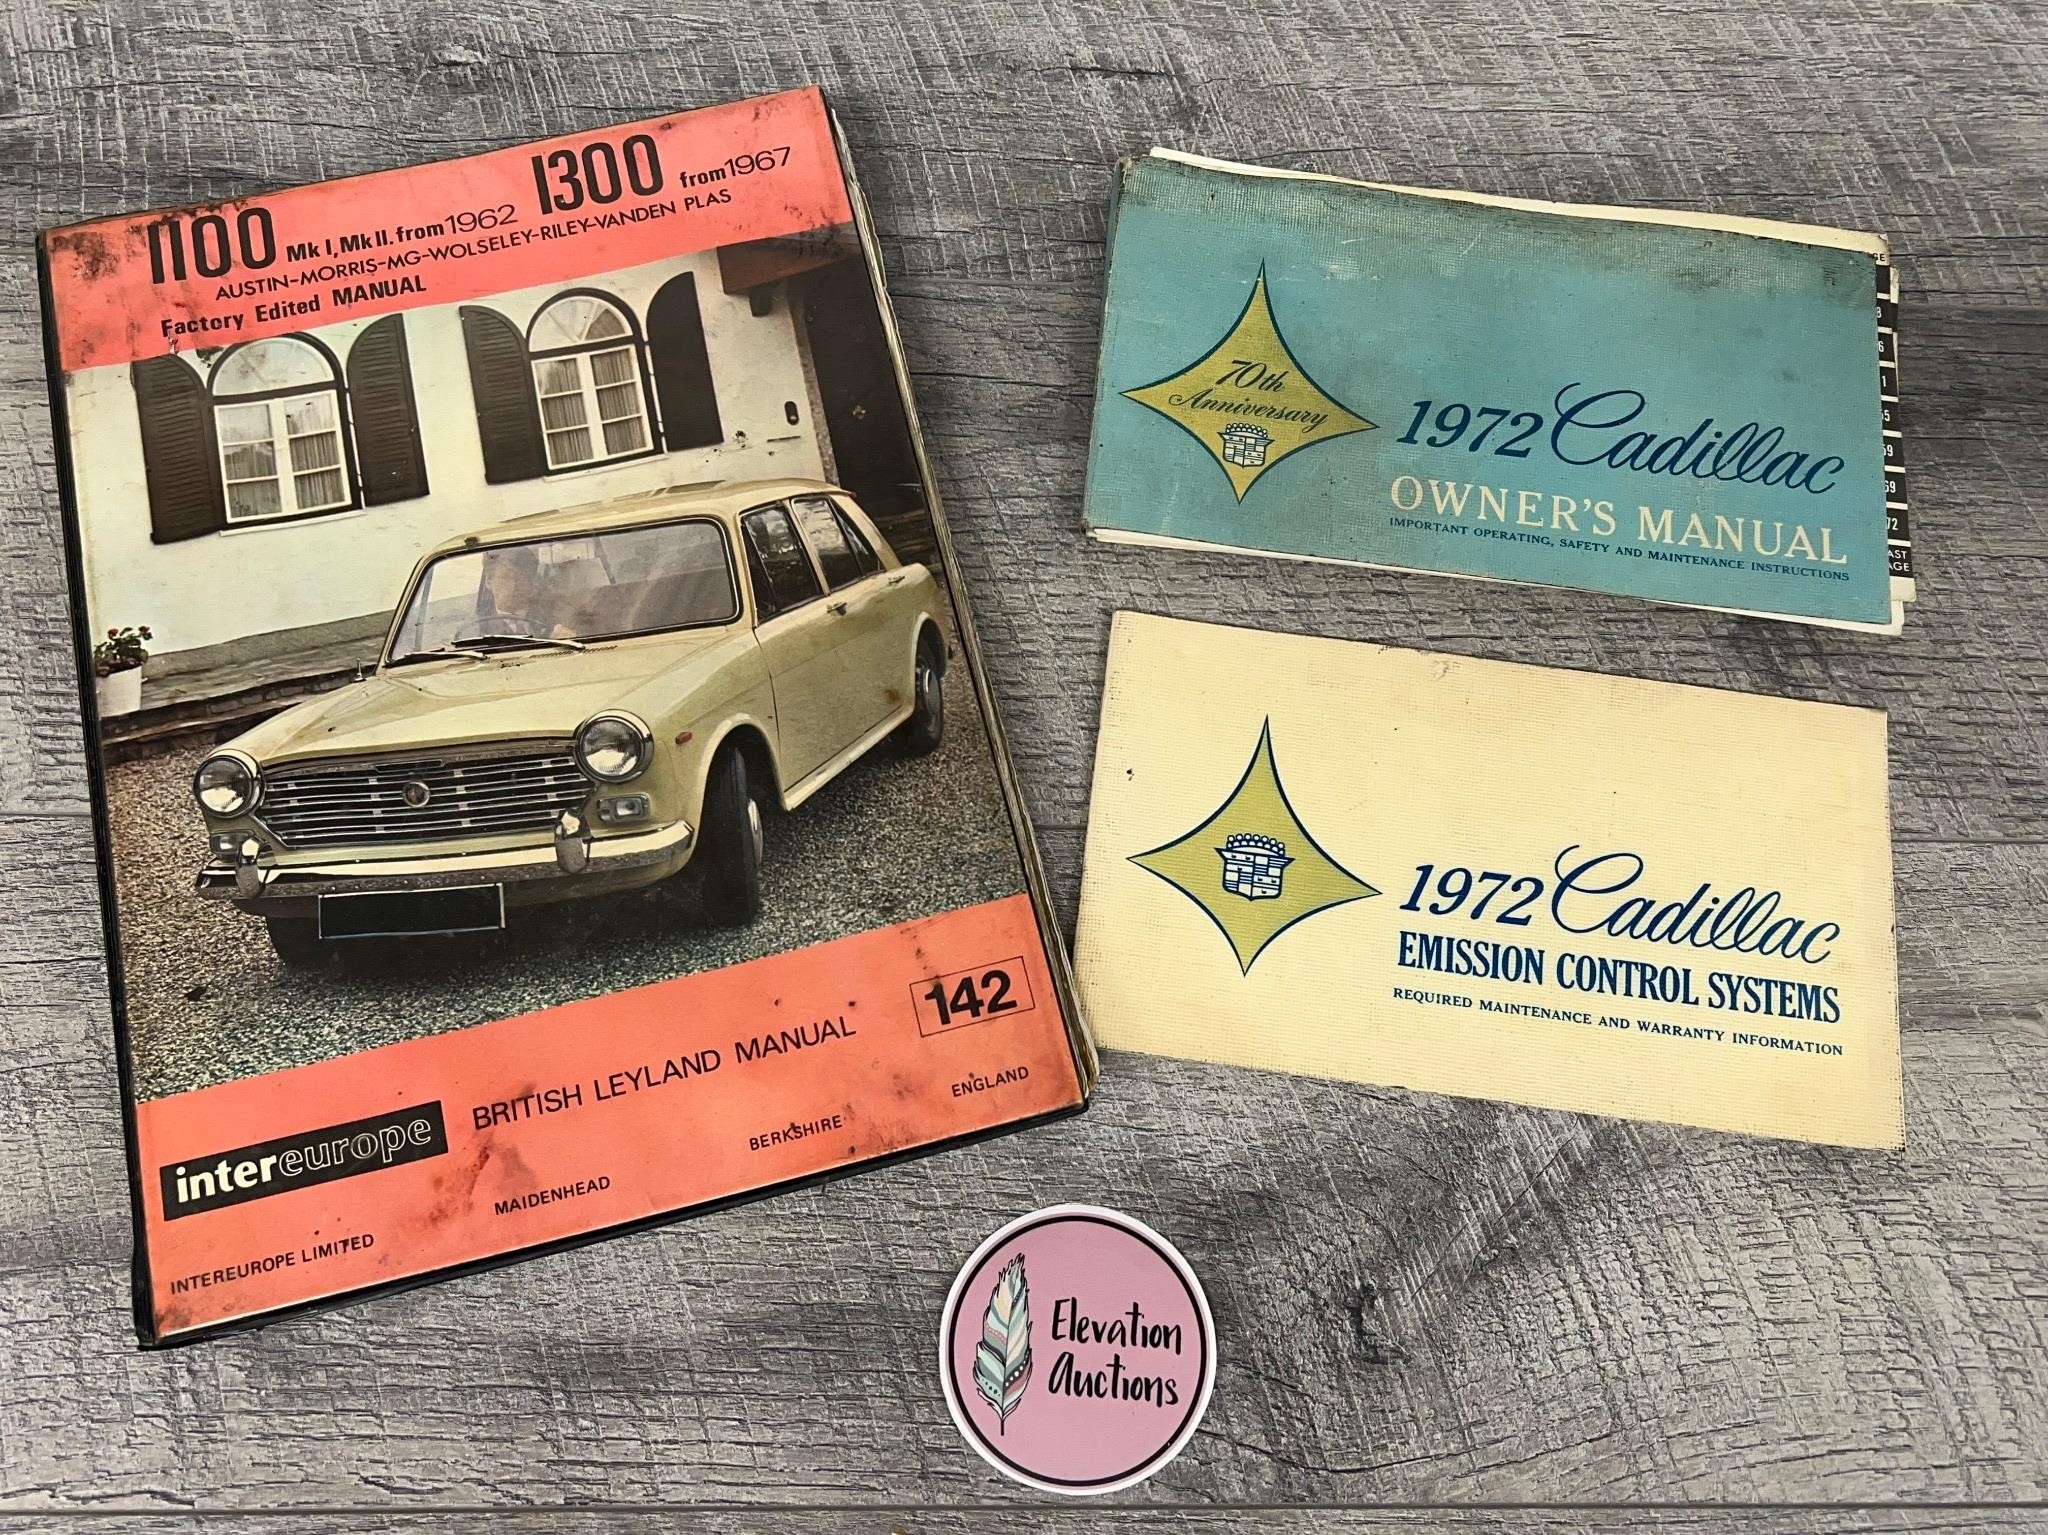 Vintage auto manuals, 1972 Cadillac and MK1 MK2